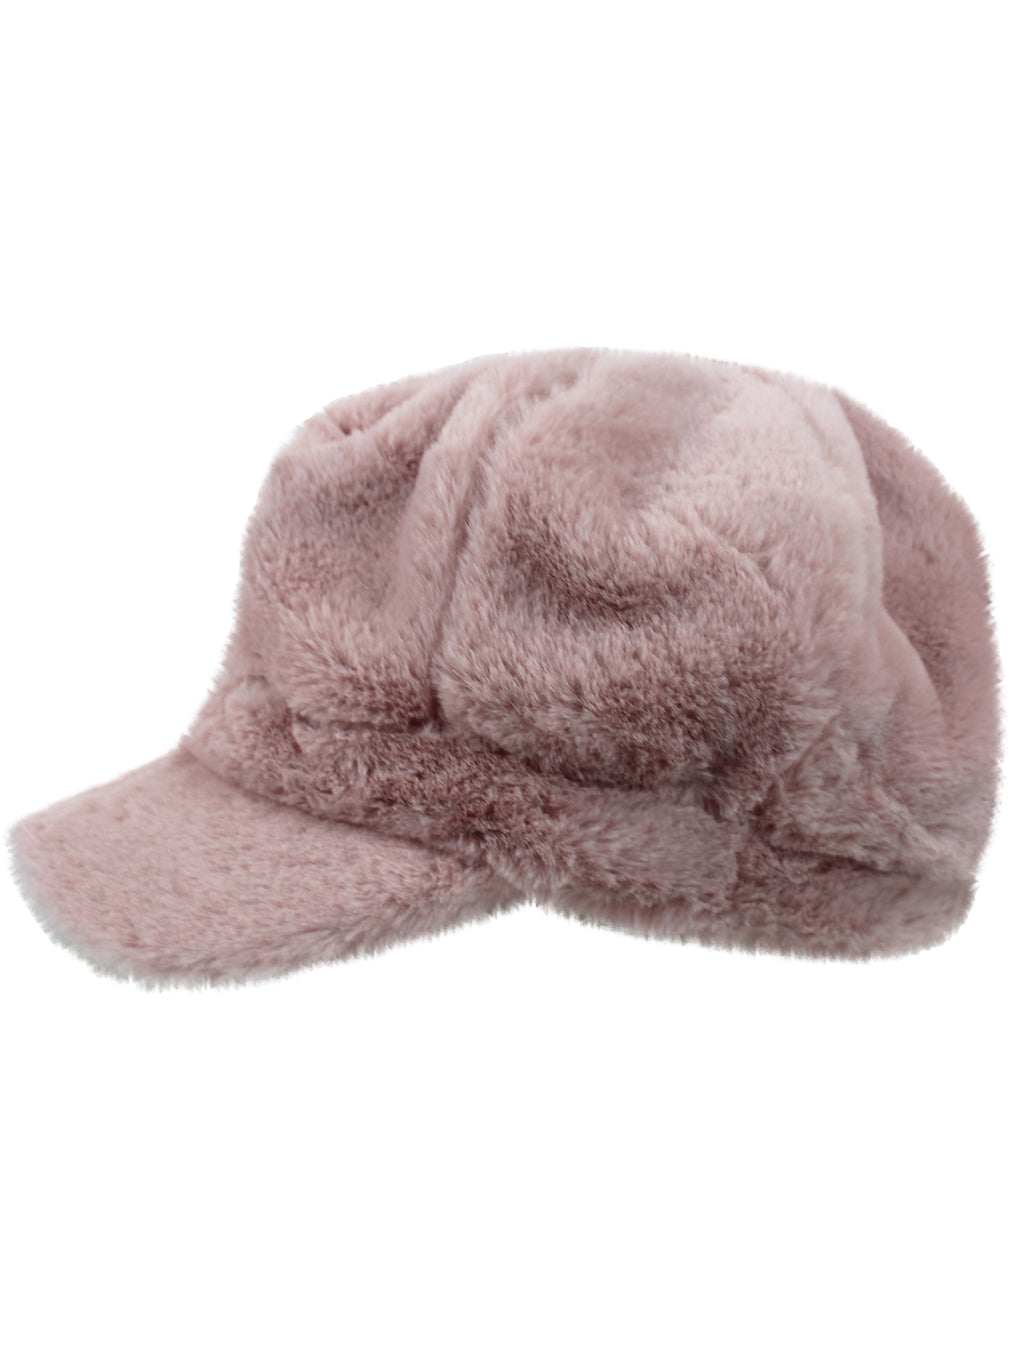 Blush Pink Faux Fur Cabbie Newsboy Hat